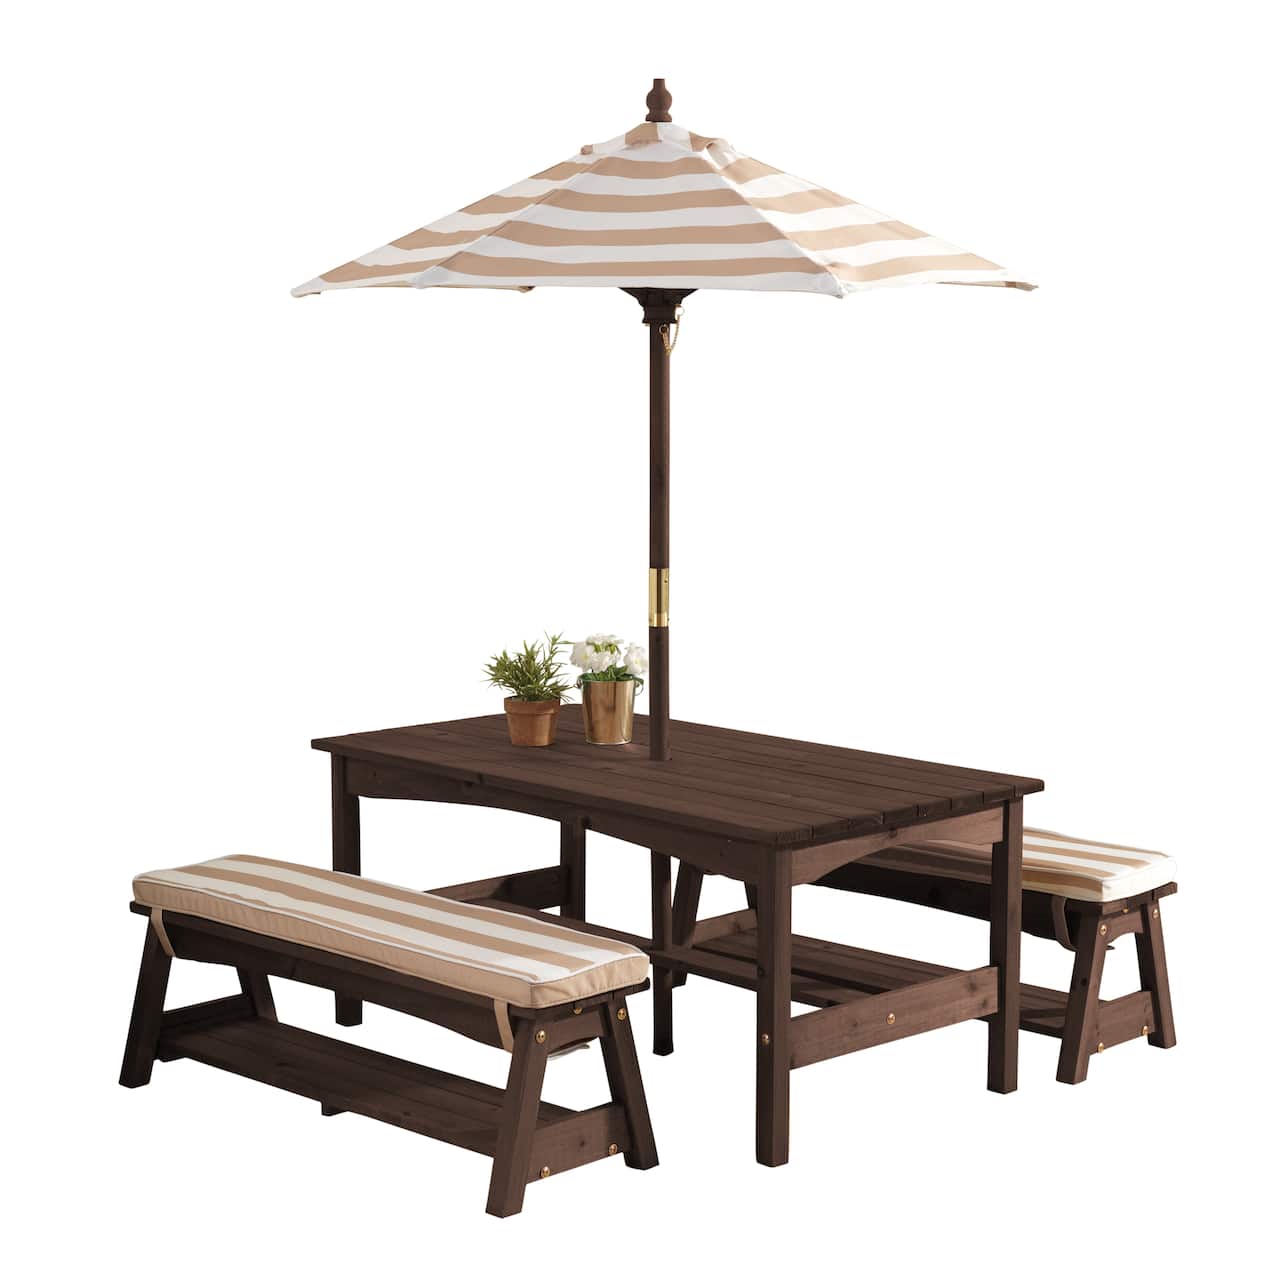 KidKraft Oatmeal &#x26; White Stripes Outdoor Table &#x26; Bench Set with Cushions &#x26; Umbrella